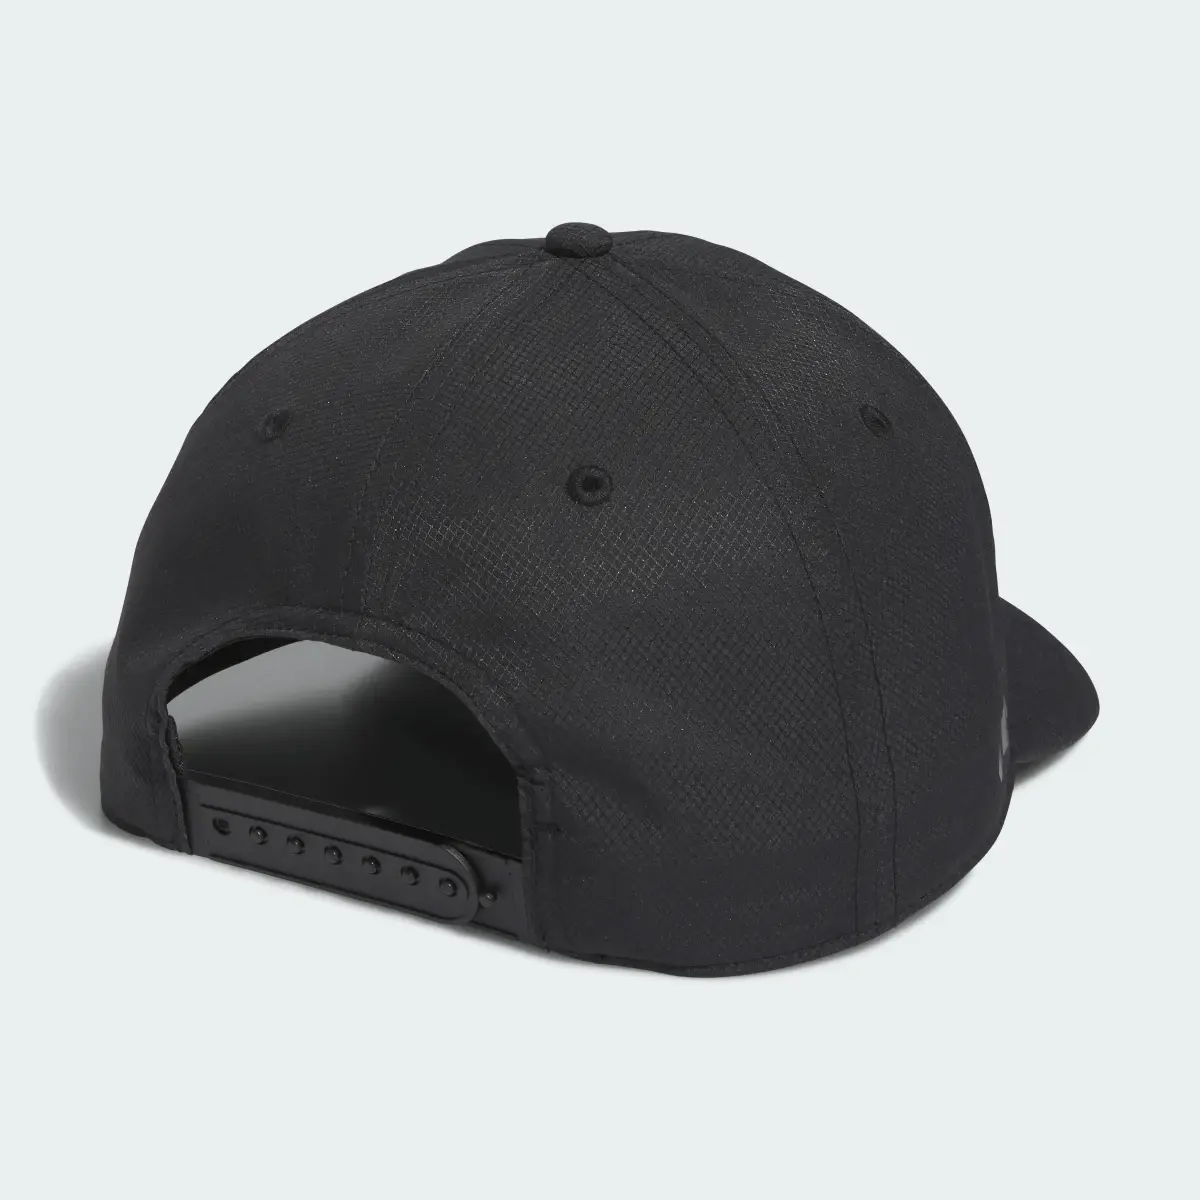 Adidas Crestable Tour Snapback Hat. 3